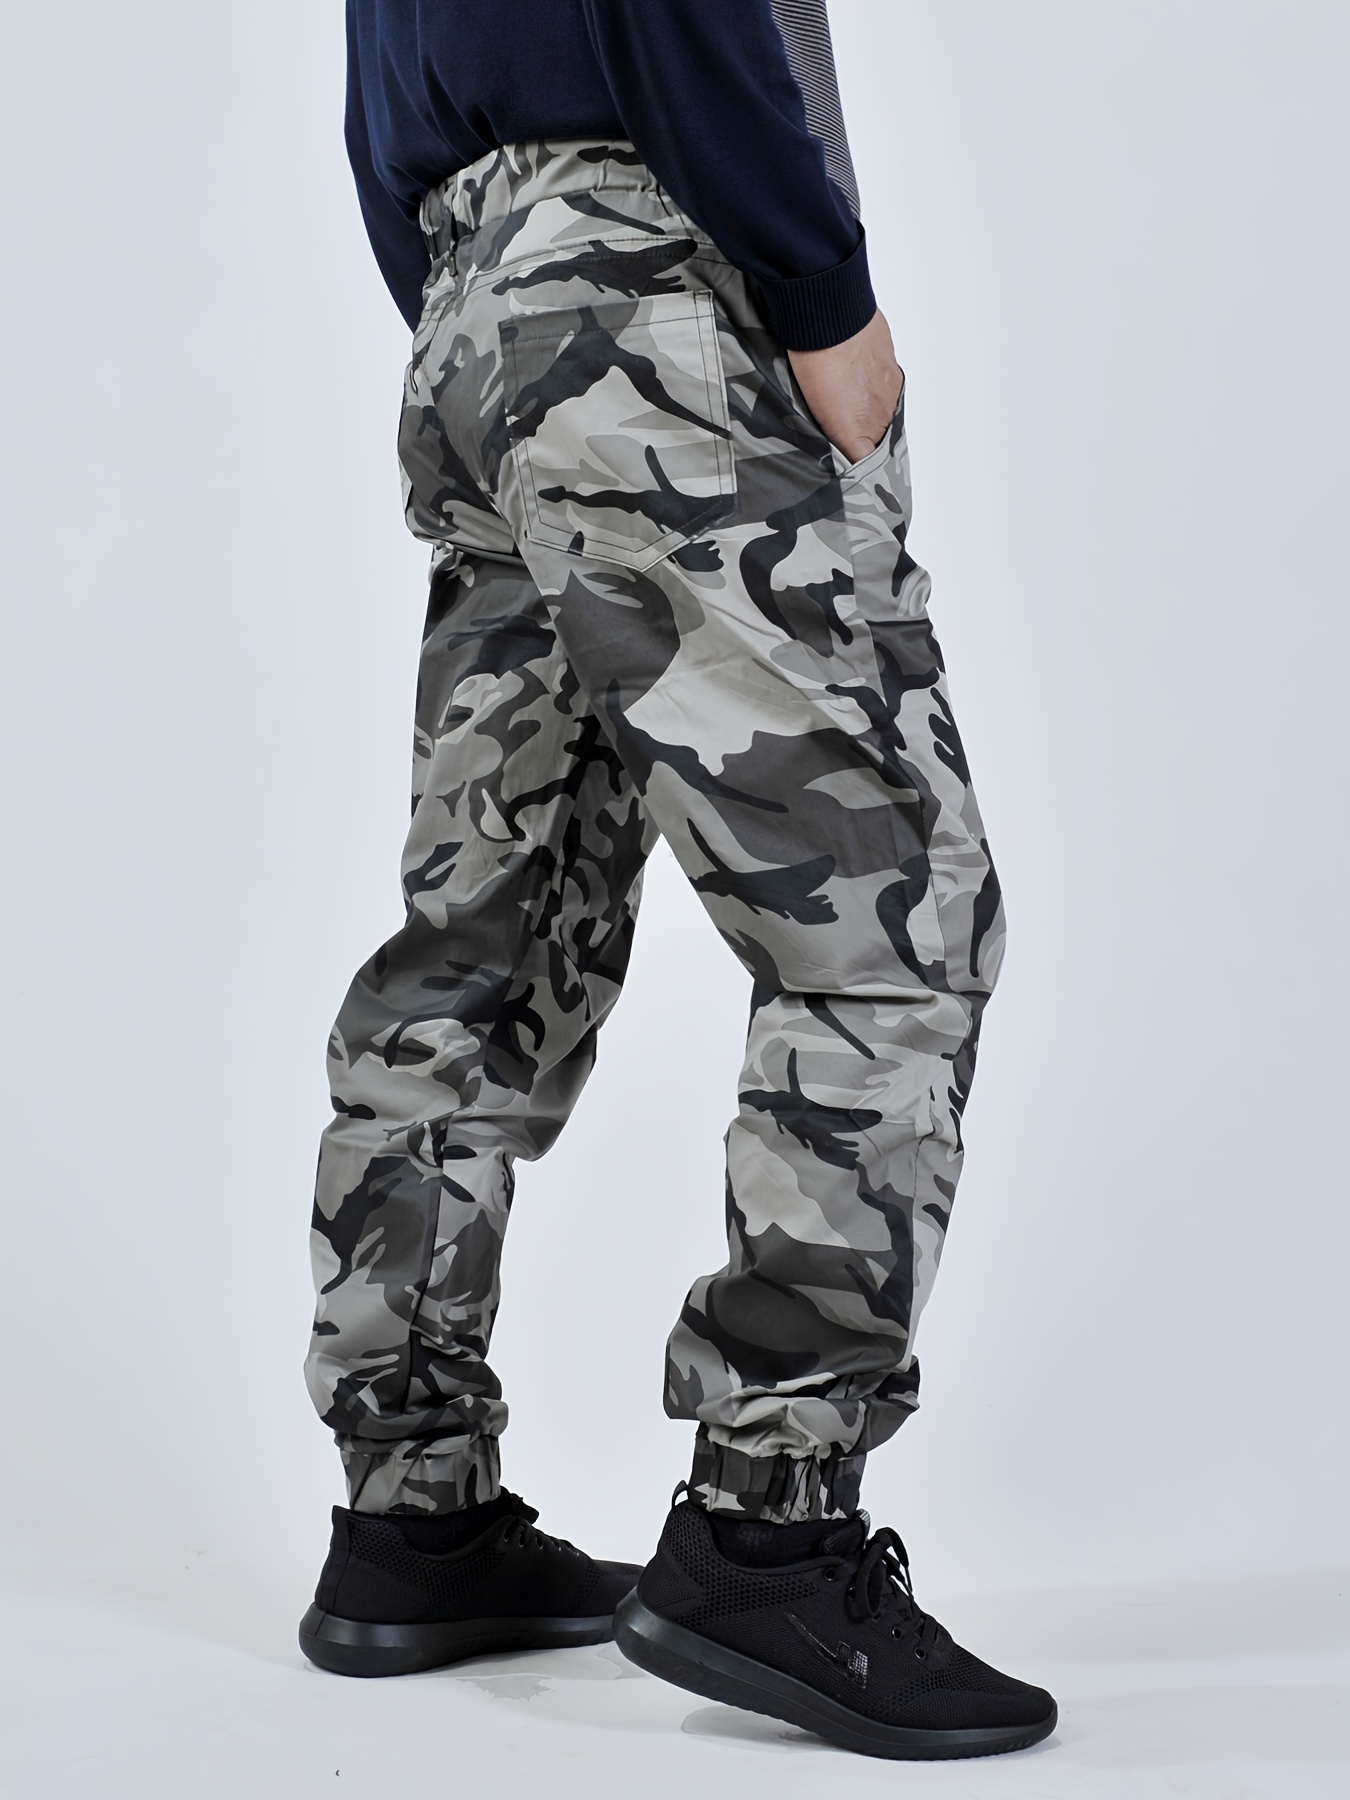 Pantalones largos Casuales DE Moda Camuflaje Para Hombre Militares Cargo  DeportE